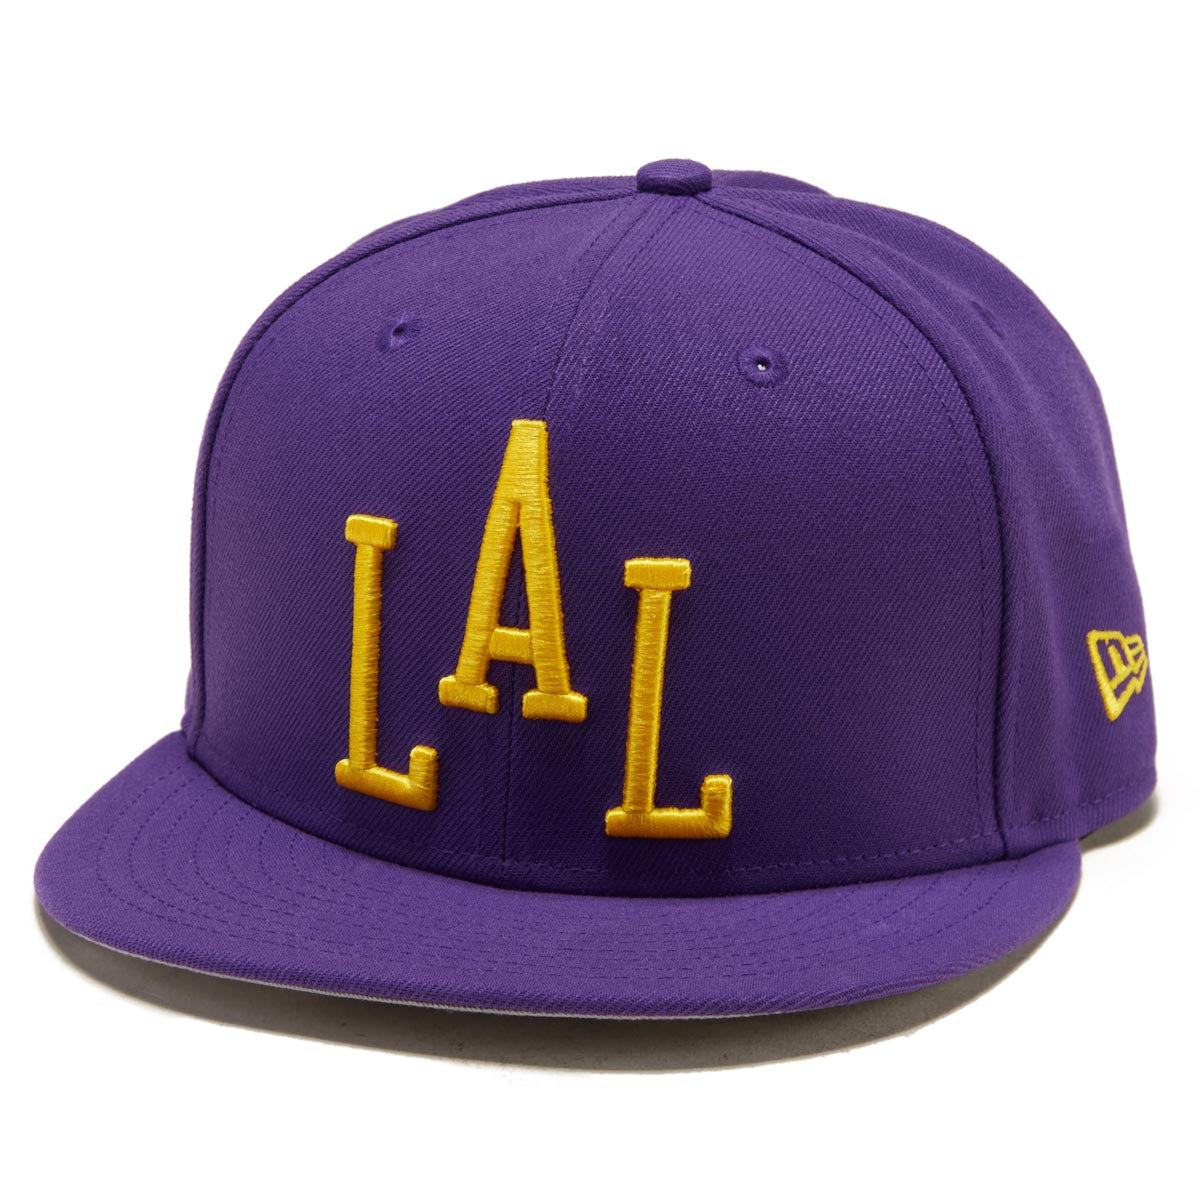 New Era x NBA 950 ALT 23 Los Angeles Lakers Hat - Purple image 1